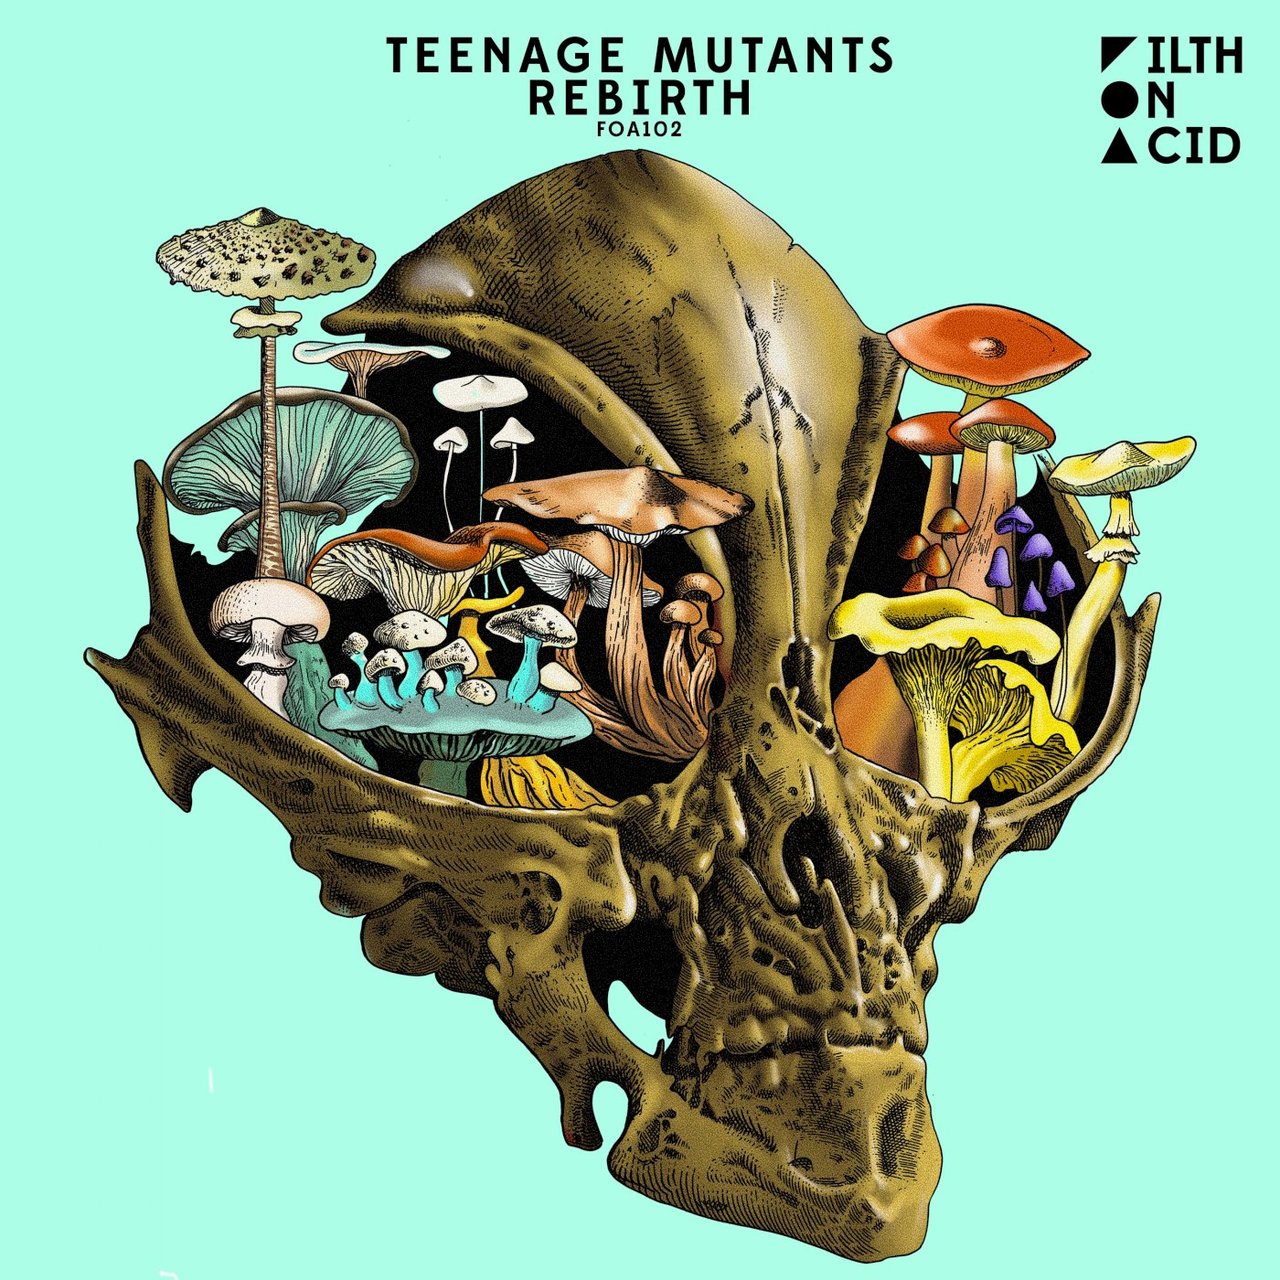 Teenage Mutants - Rebirth [FOA102]